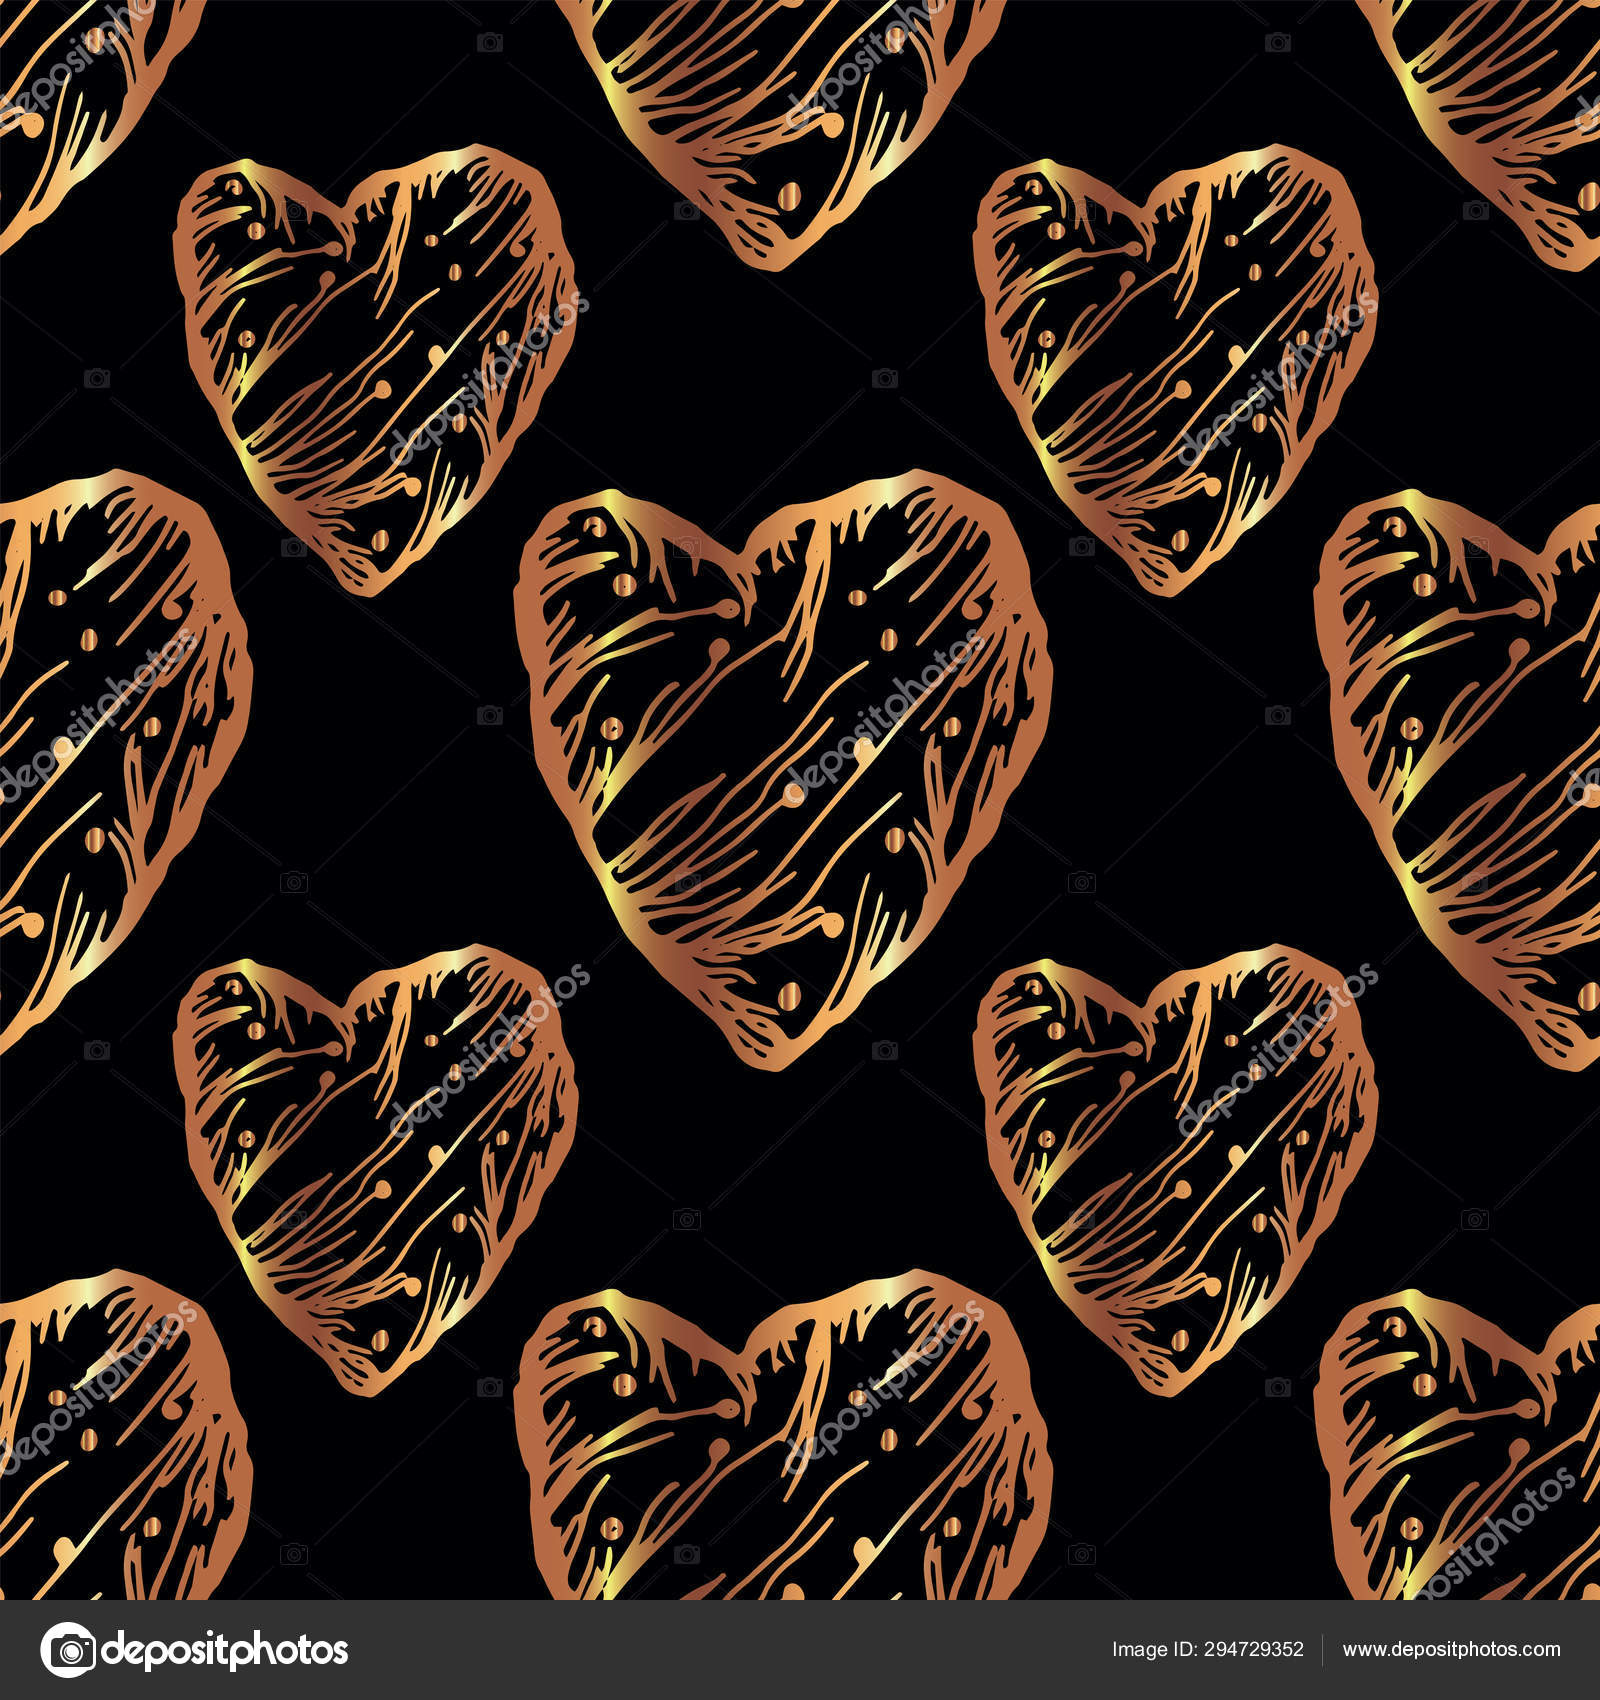 https://st4.depositphotos.com/21916792/29472/v/1600/depositphotos_294729352-stock-illustration-golden-hearts-seamless-pattern.jpg